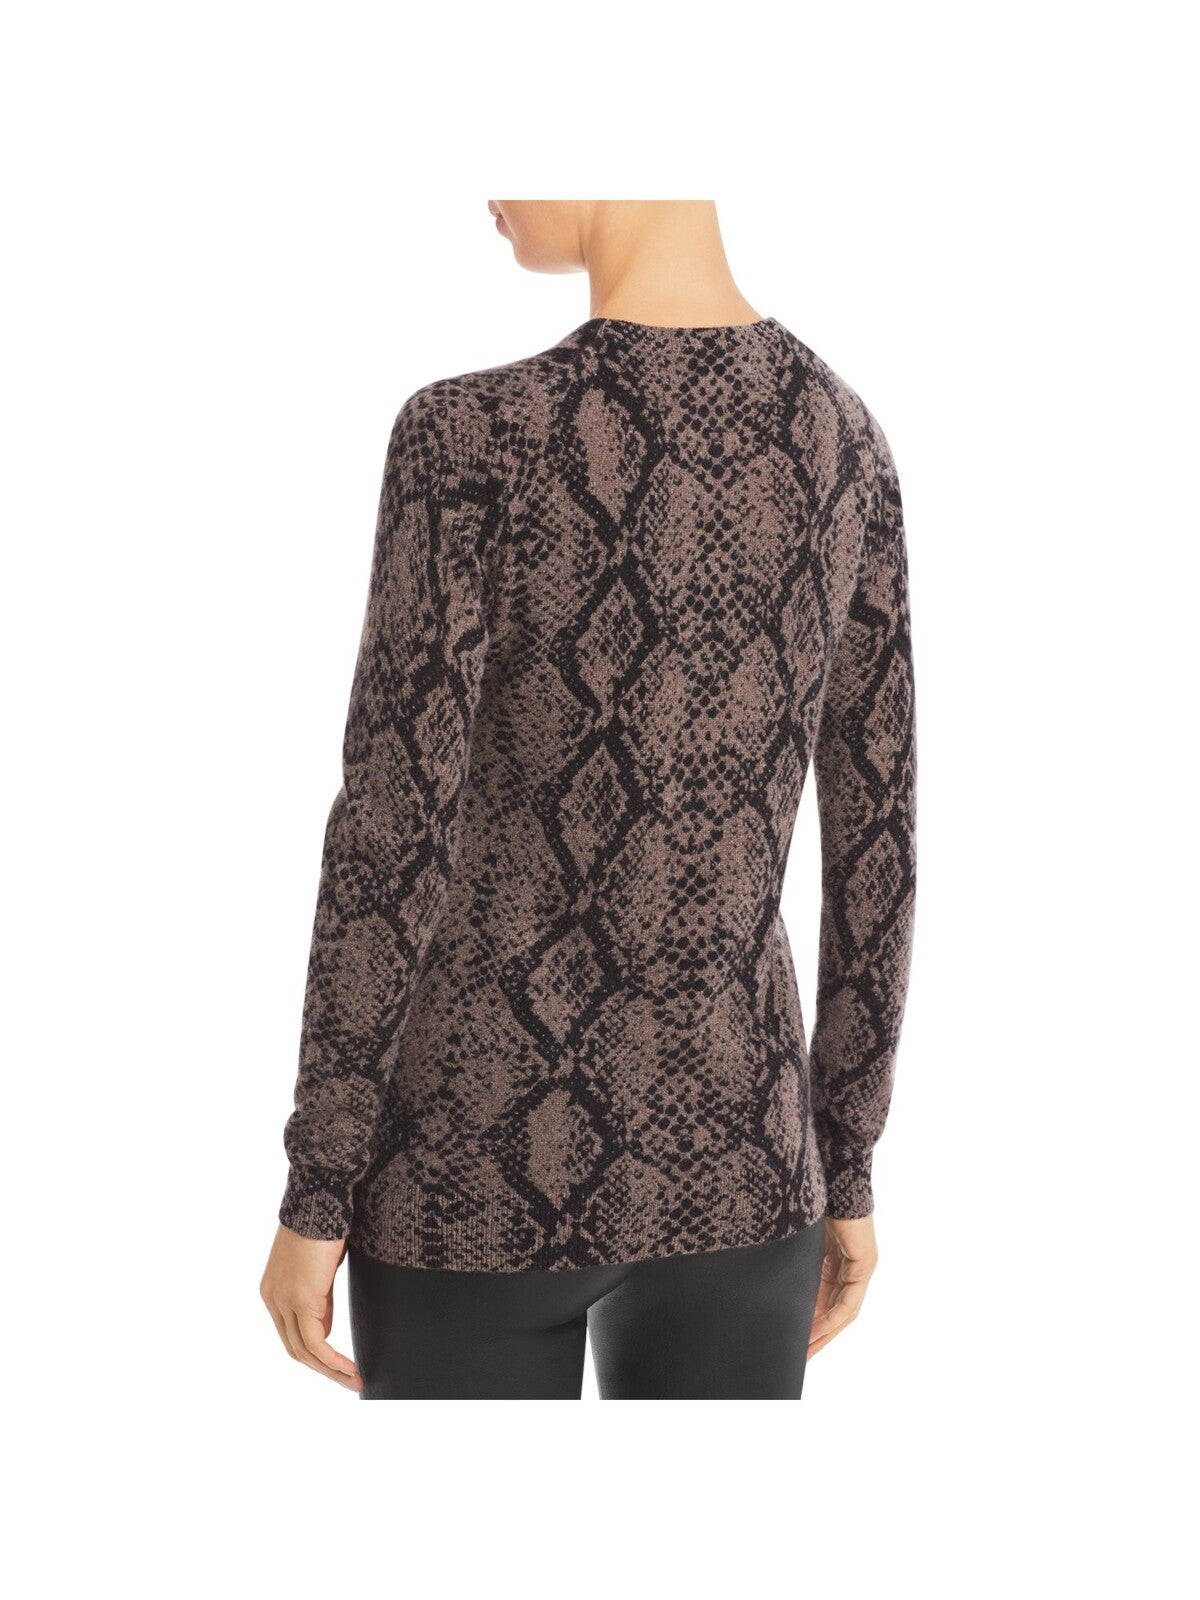 Designer Brand Womens Gray Cashmere Animal Print Long Sleeve Crew Neck Wear To Work Sweater M